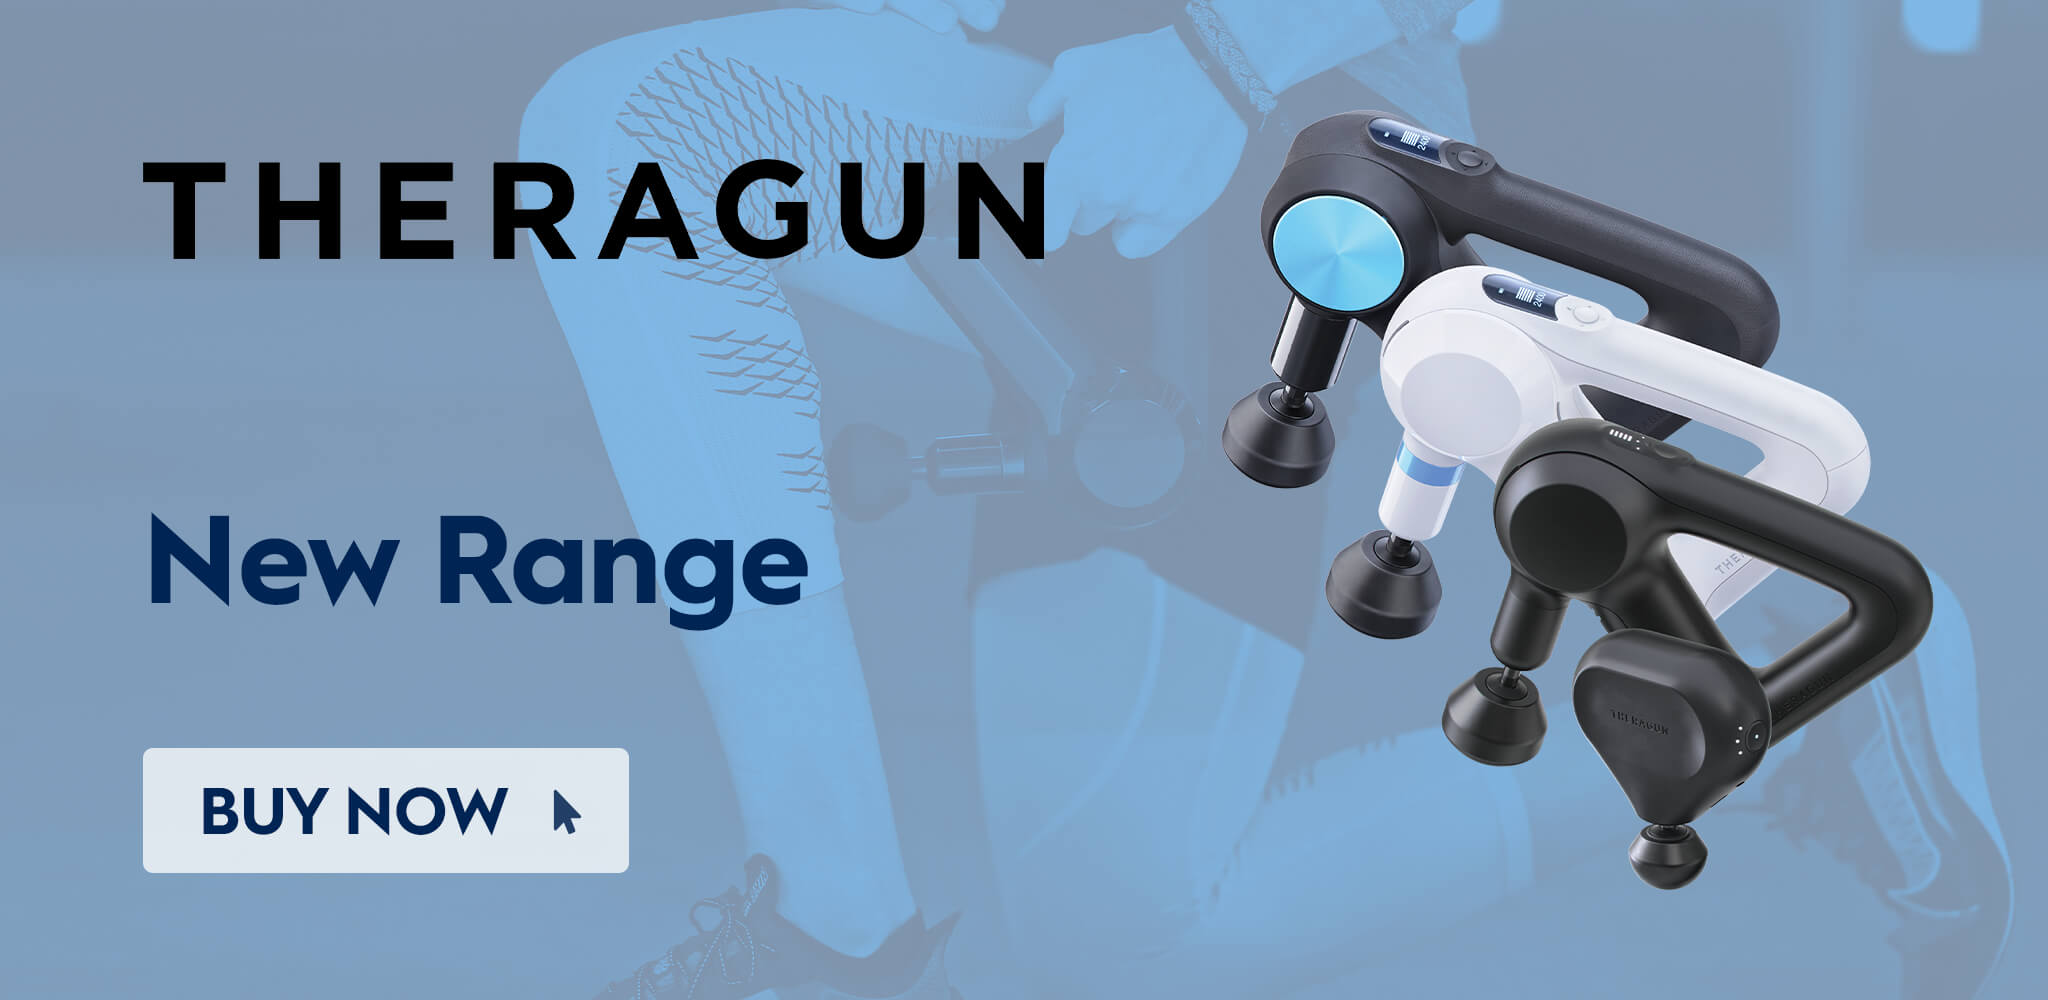 Theragun new range